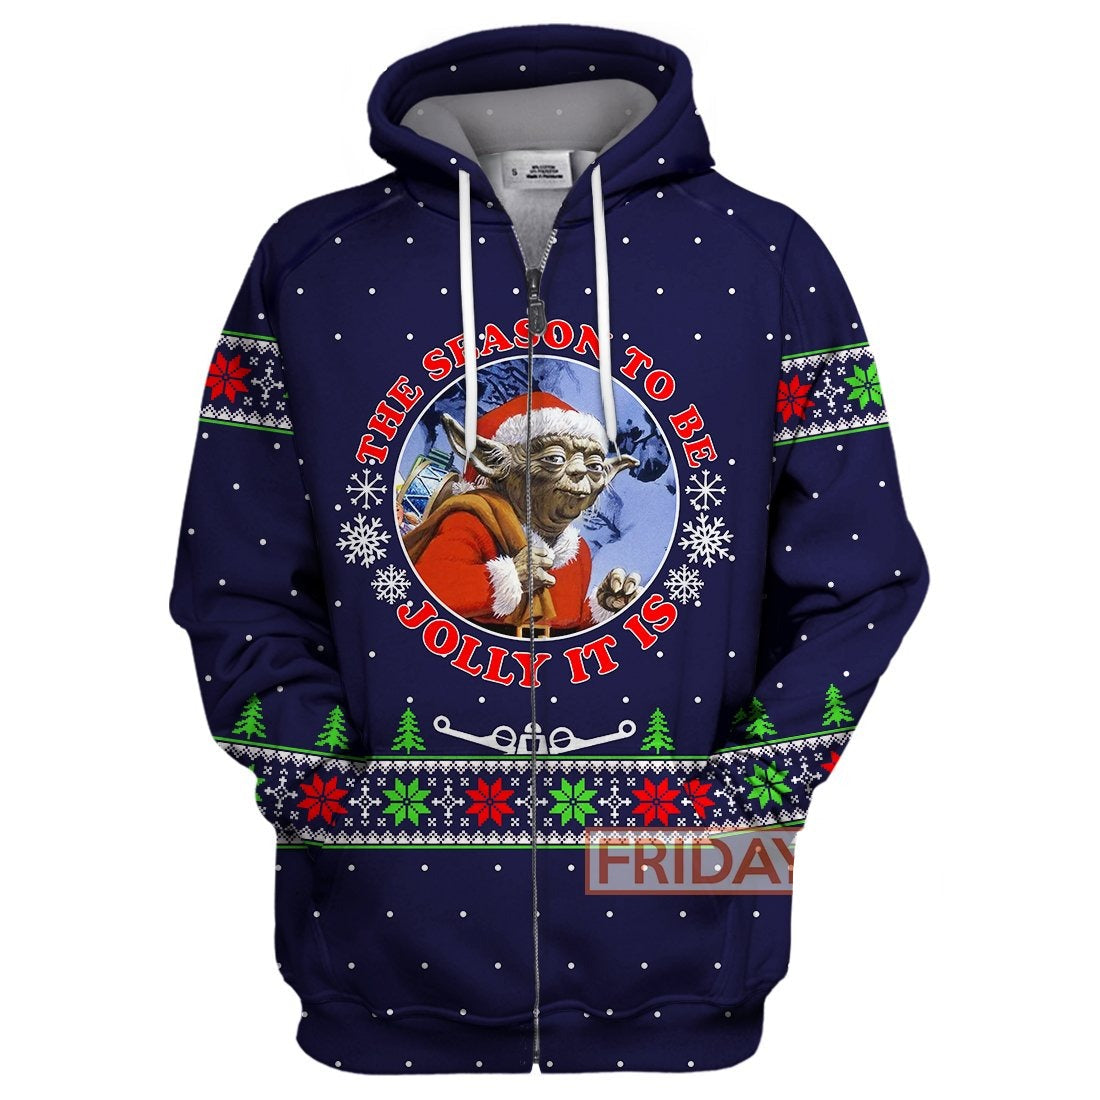 Unifinz SW T-shirt Yoda The Season To Be Jolly It Is Christmas T-shirt Amazing SW Hoodie Sweater Tank 2026